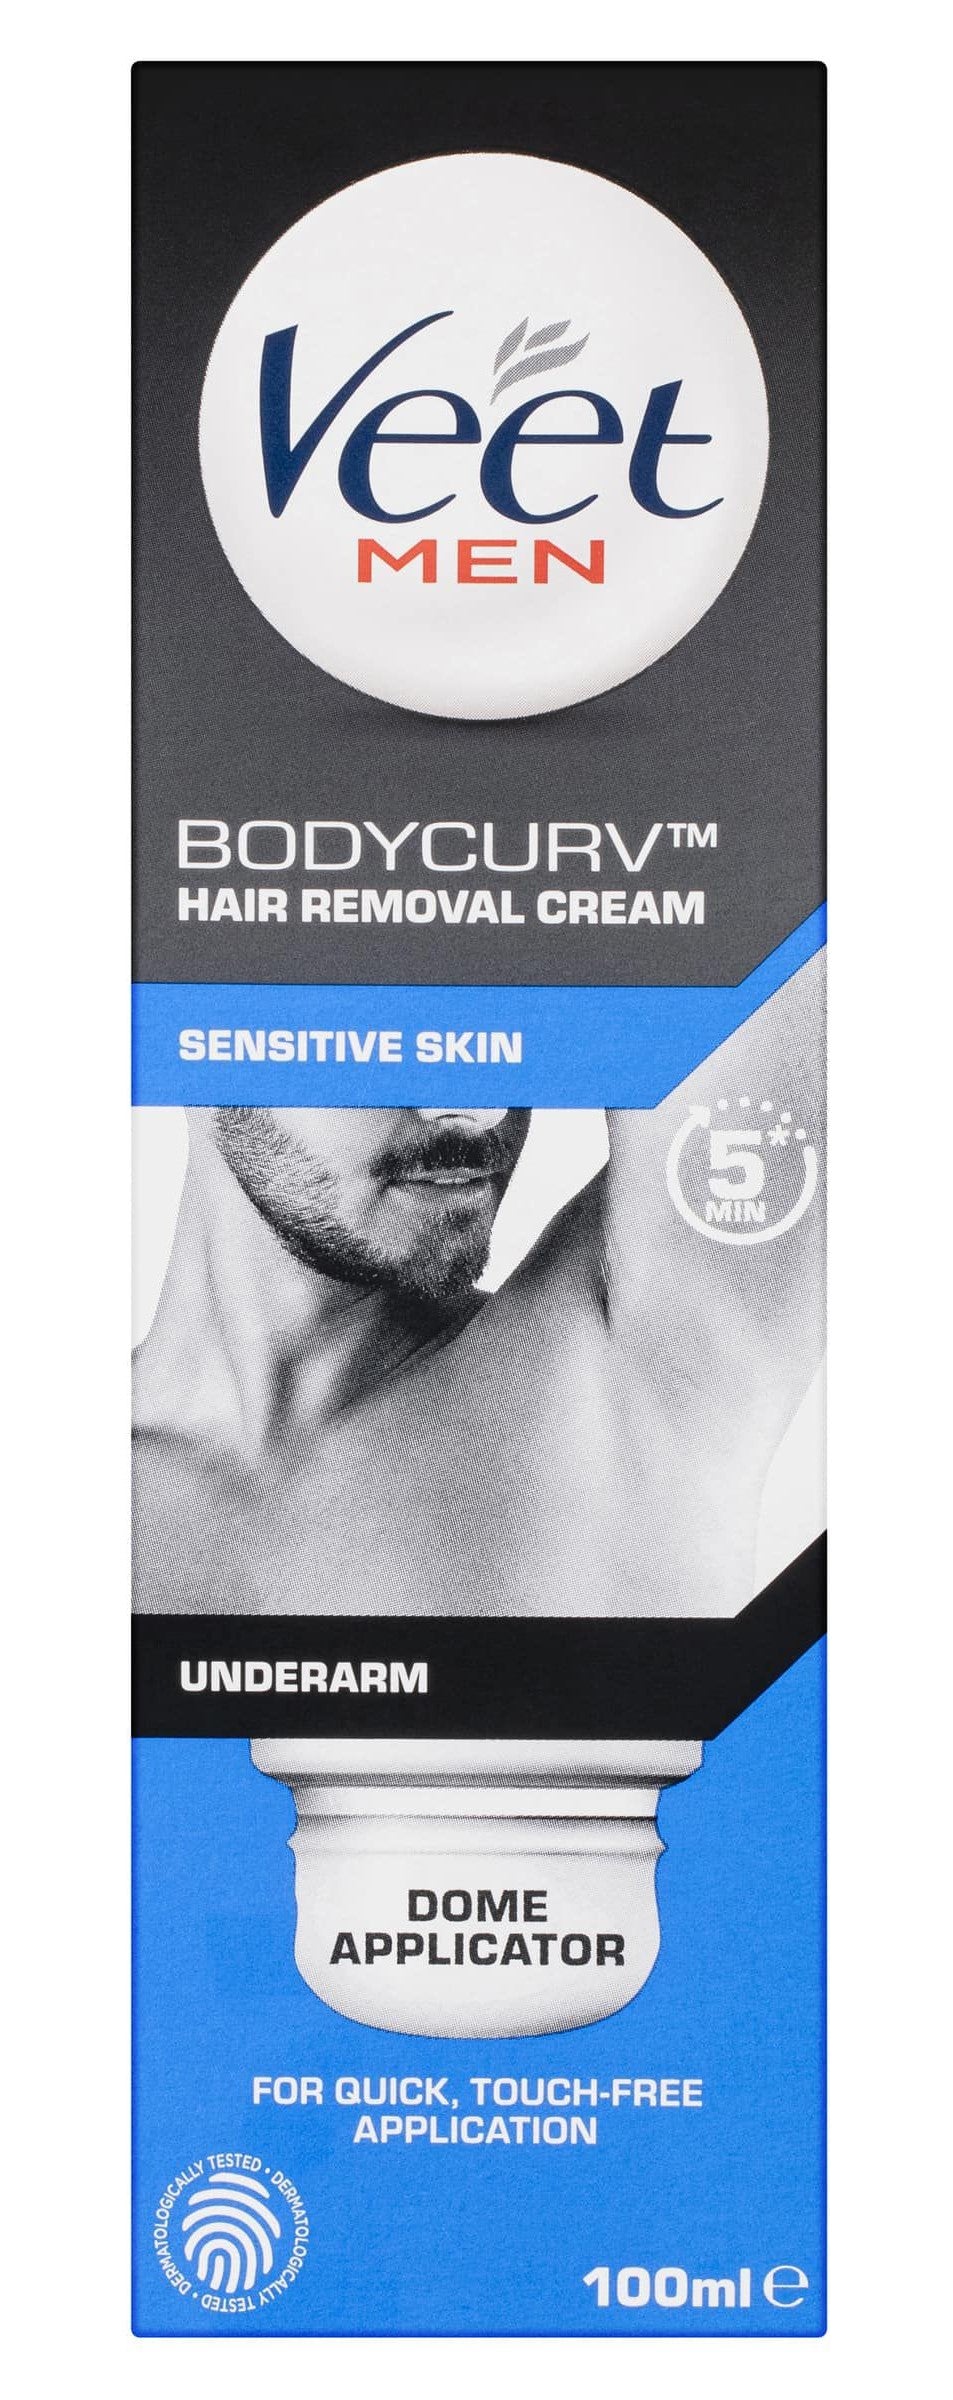 Veet Men Bodycurv Hair Removal Cream Sensitive Skin 100ml